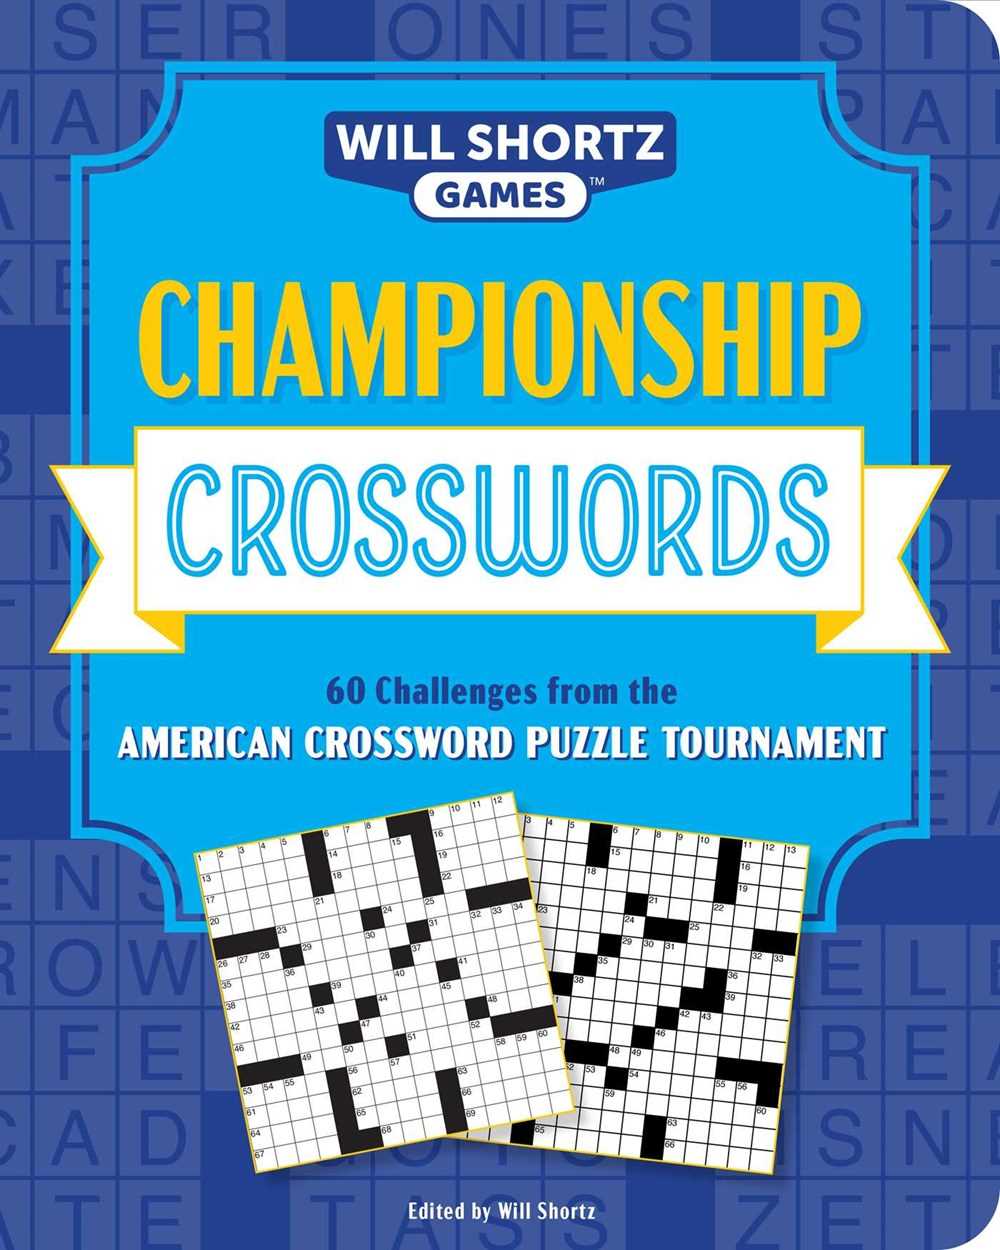 Championship Crosswords (Will Shortz Games)